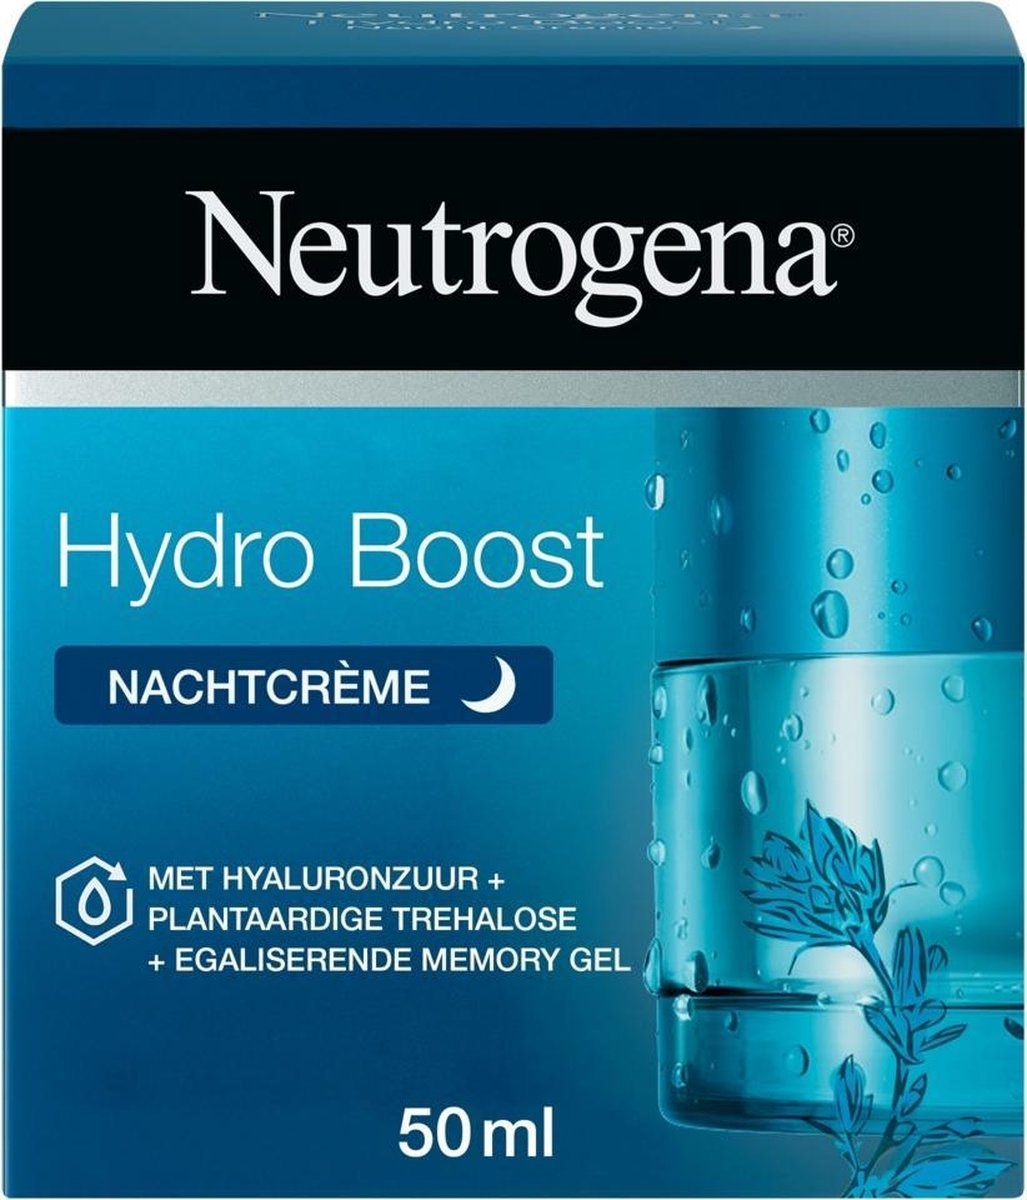 Neutrogena Nachtcreme Hydro Boost 50 ml - Verpakking beschadigd